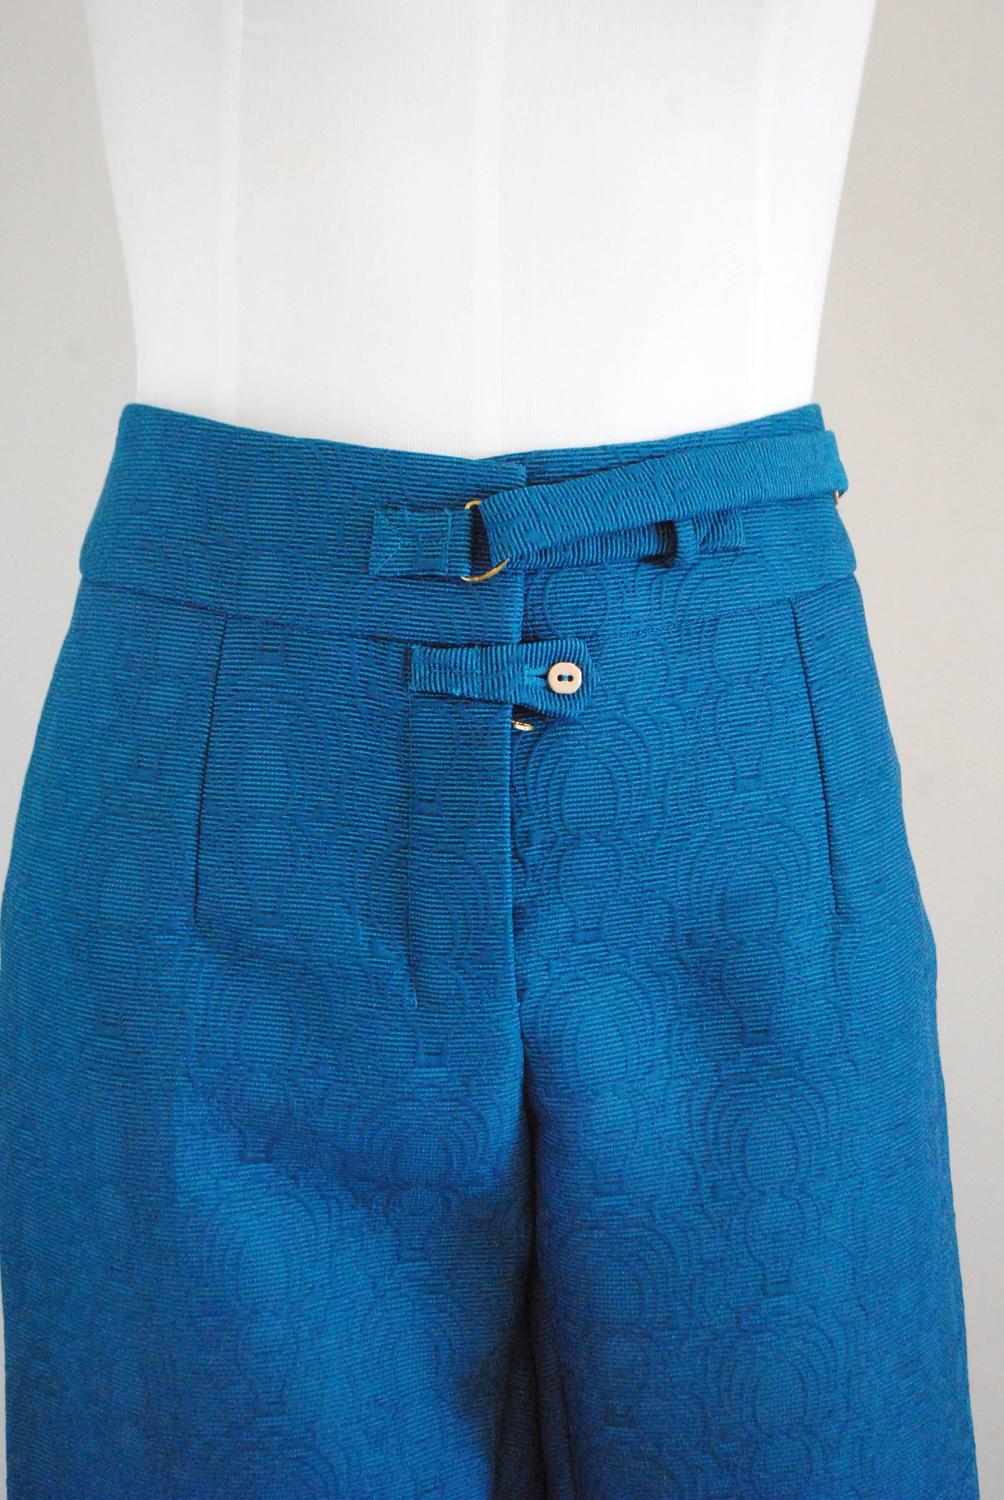 2012 Yves Saint Laurent blu pants NWOT For Sale at 1stdibs